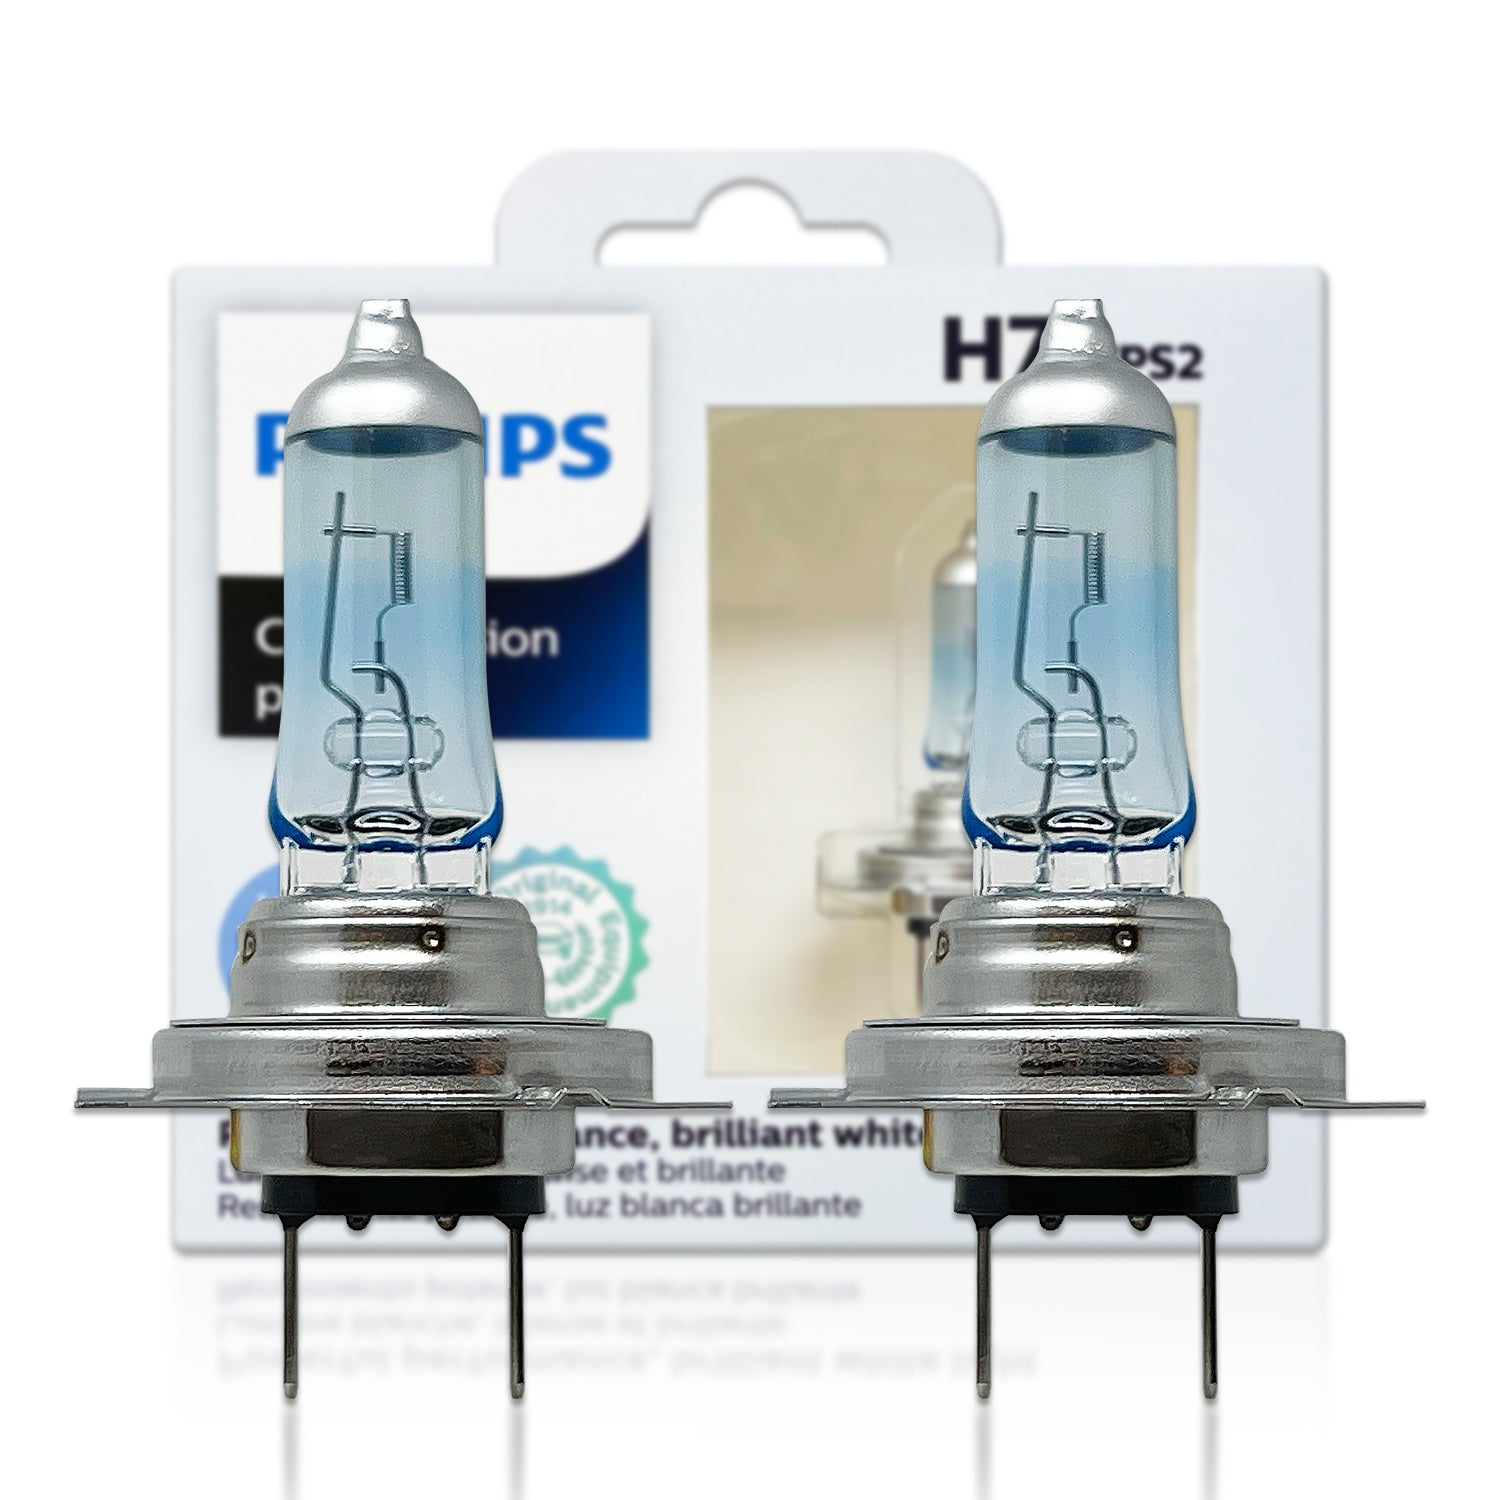 Philips 11972U6000X2 Ultinon Pro6000 H7-LED Lamp Bulb Illuminate +230%  Light